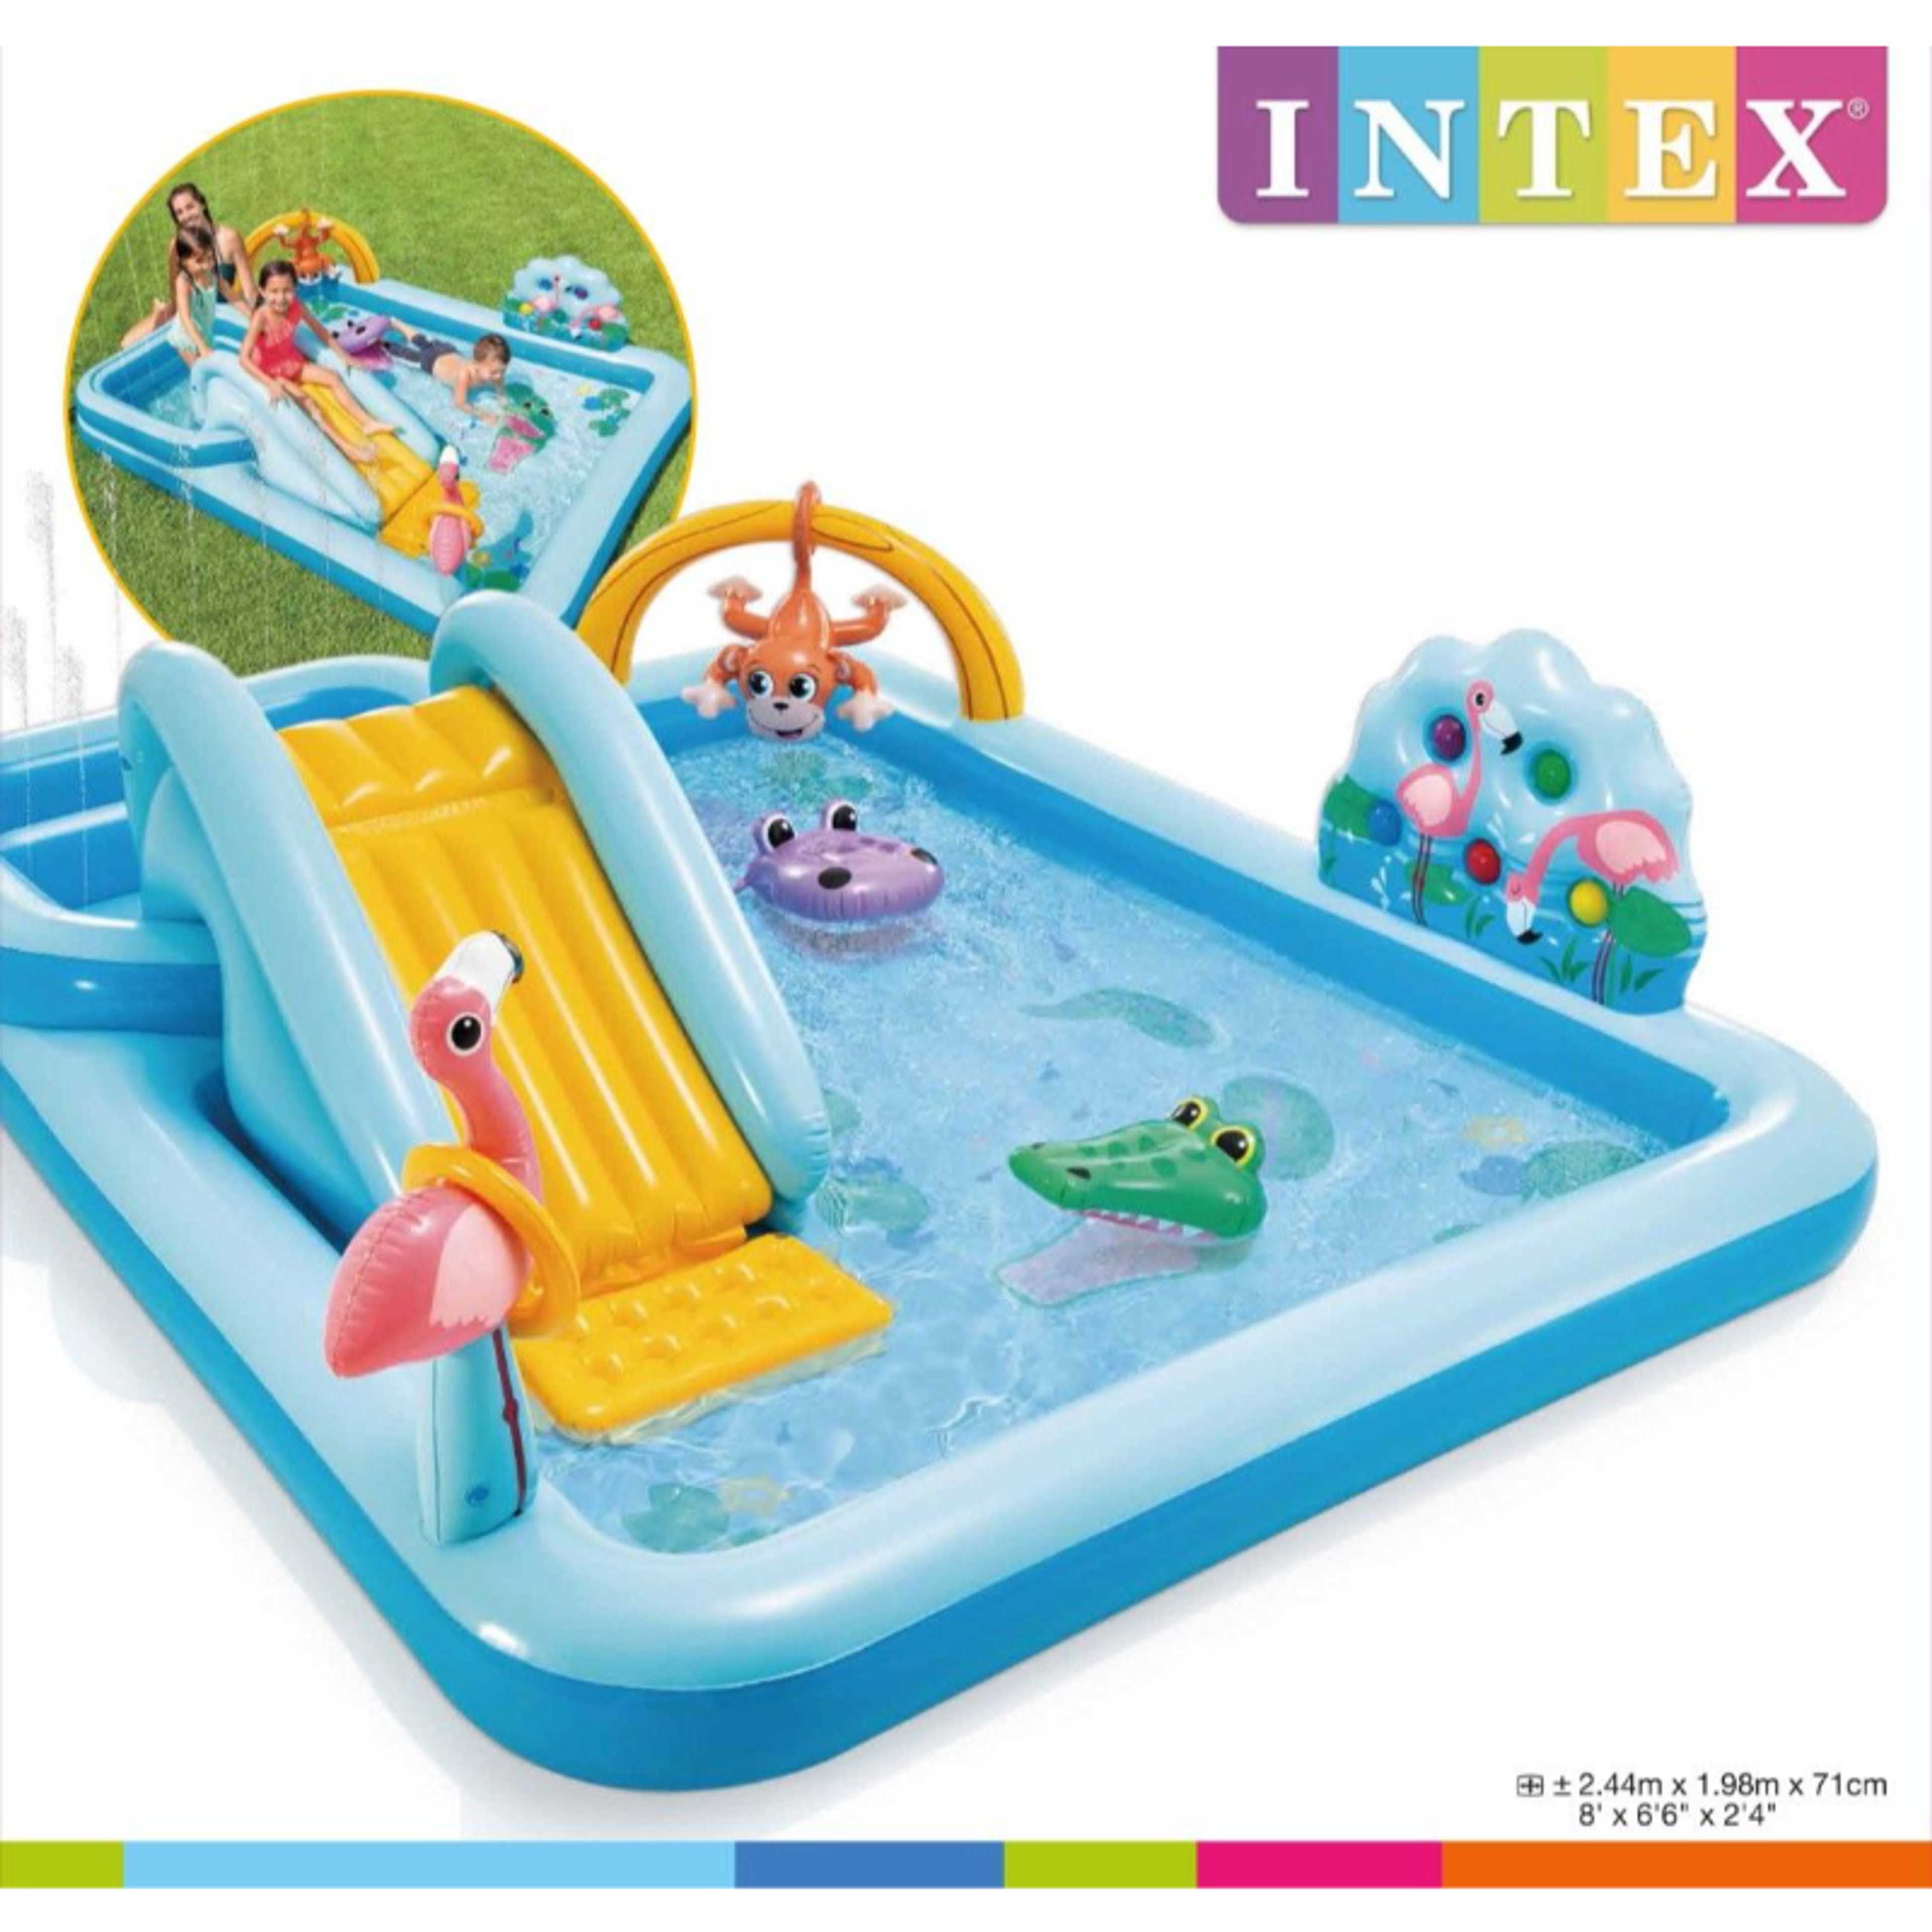 2.57m X 2.16m X 84cm Intex Jungle Adventure Play Center Inflatable Kiddie Spray Wading Pool